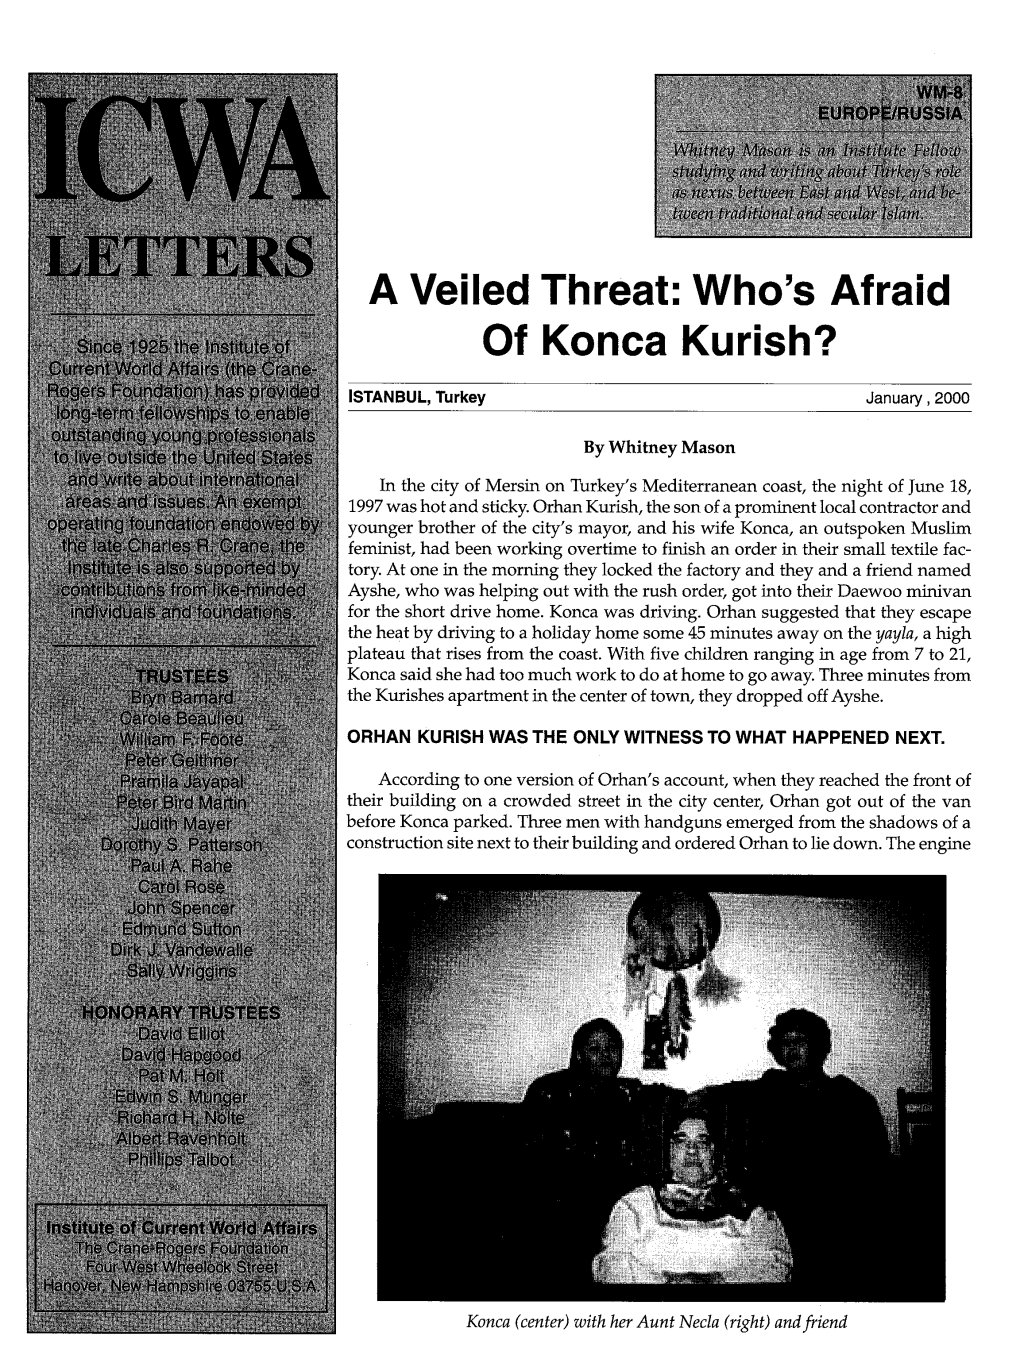 Who's Afraid of Konca Kurish?